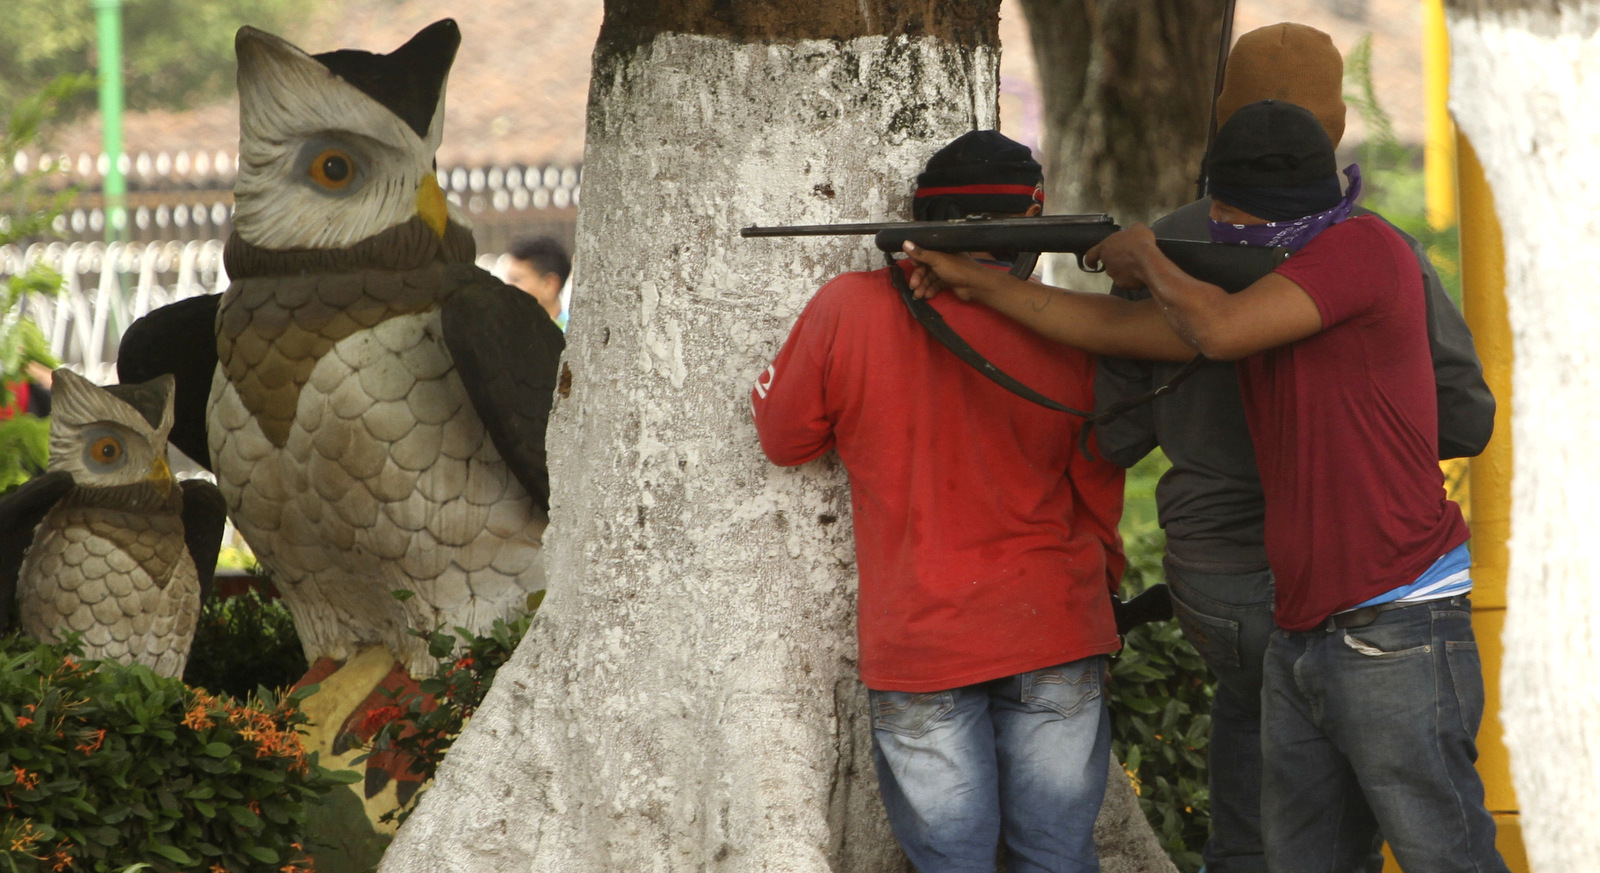 Members of the Nicaragua's opposition aim hunting rifles at police during protests in Masaya, Nicaragua, June 9, 2018. Oscar Duarte | AP